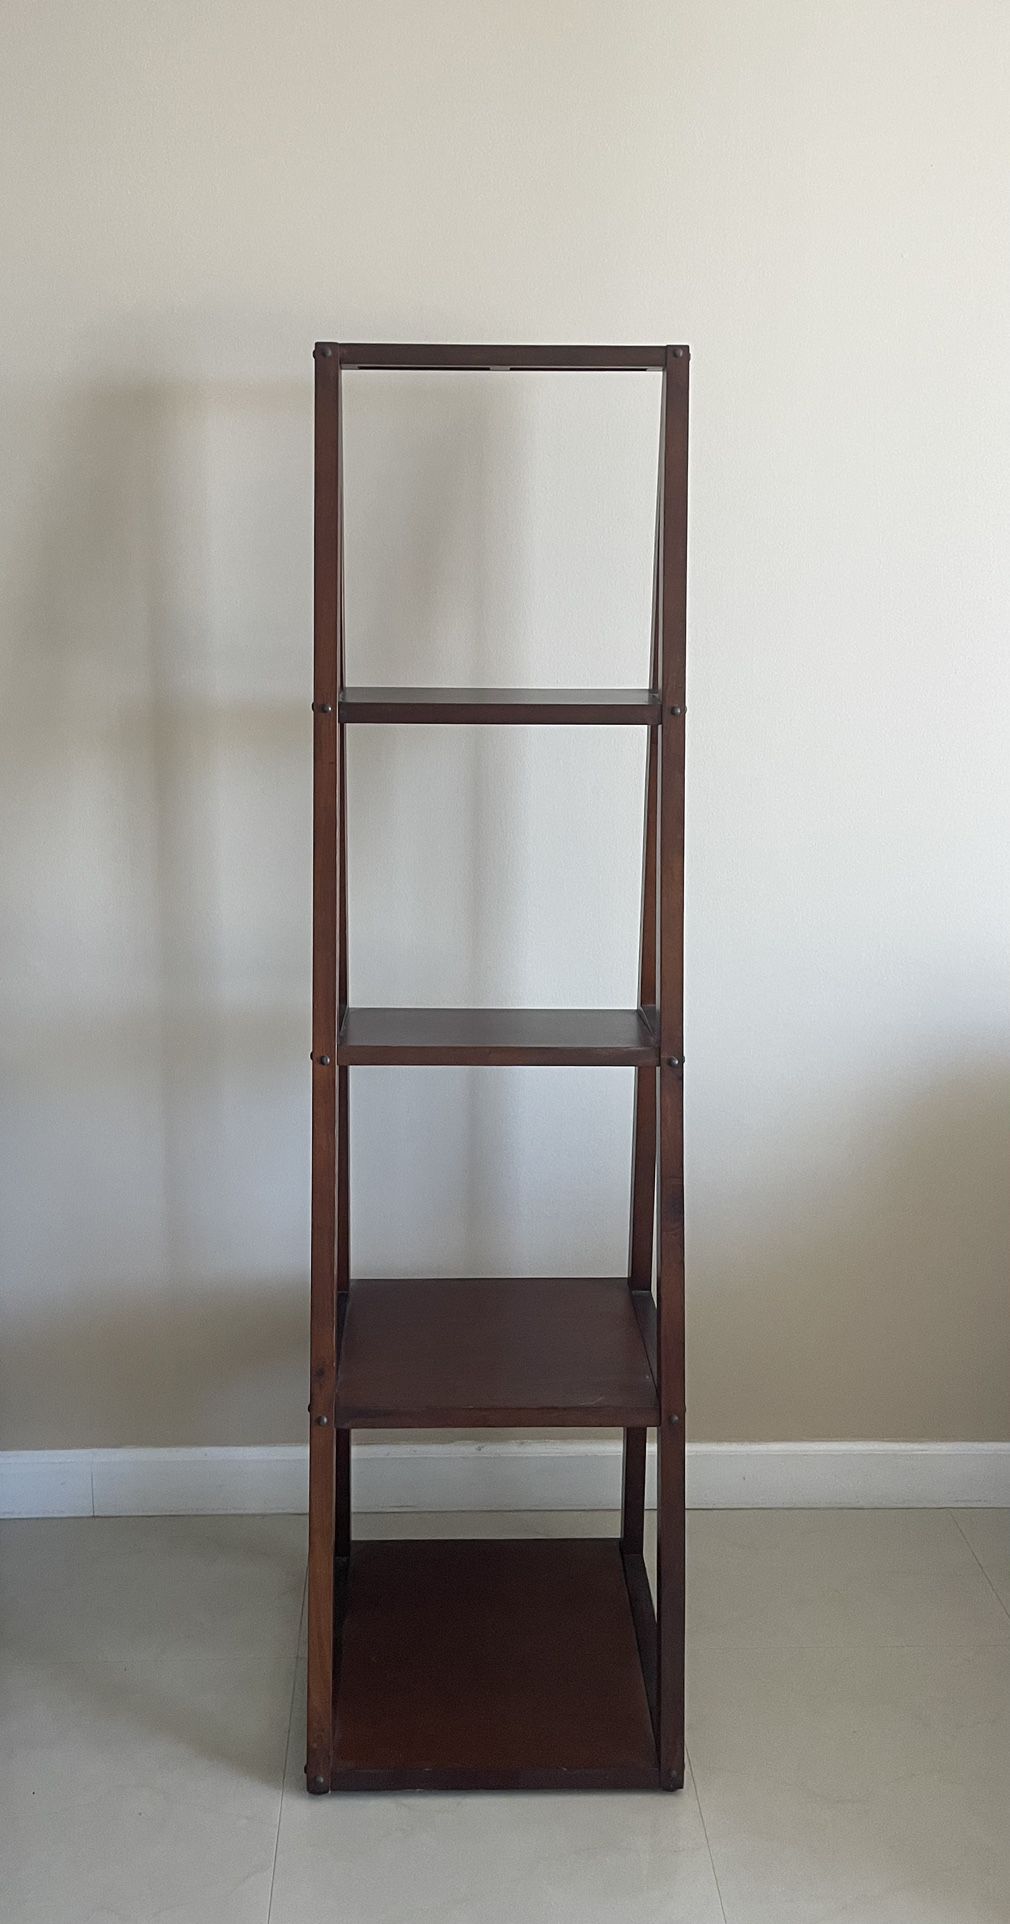 Shelf Loring Ladder Bookshelf